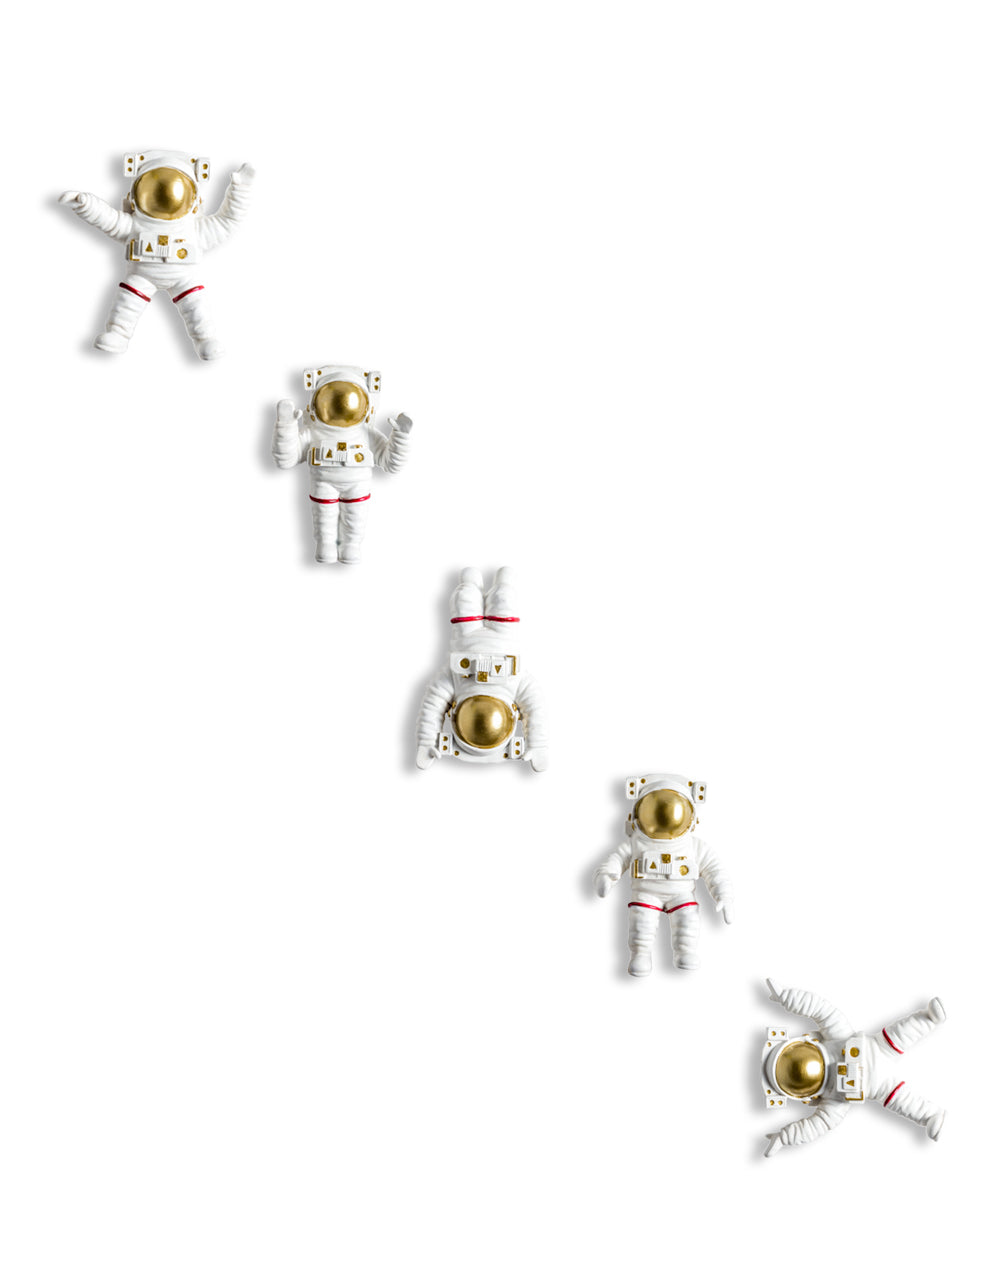 Set of 5 Floating Astronaut Wall Figures